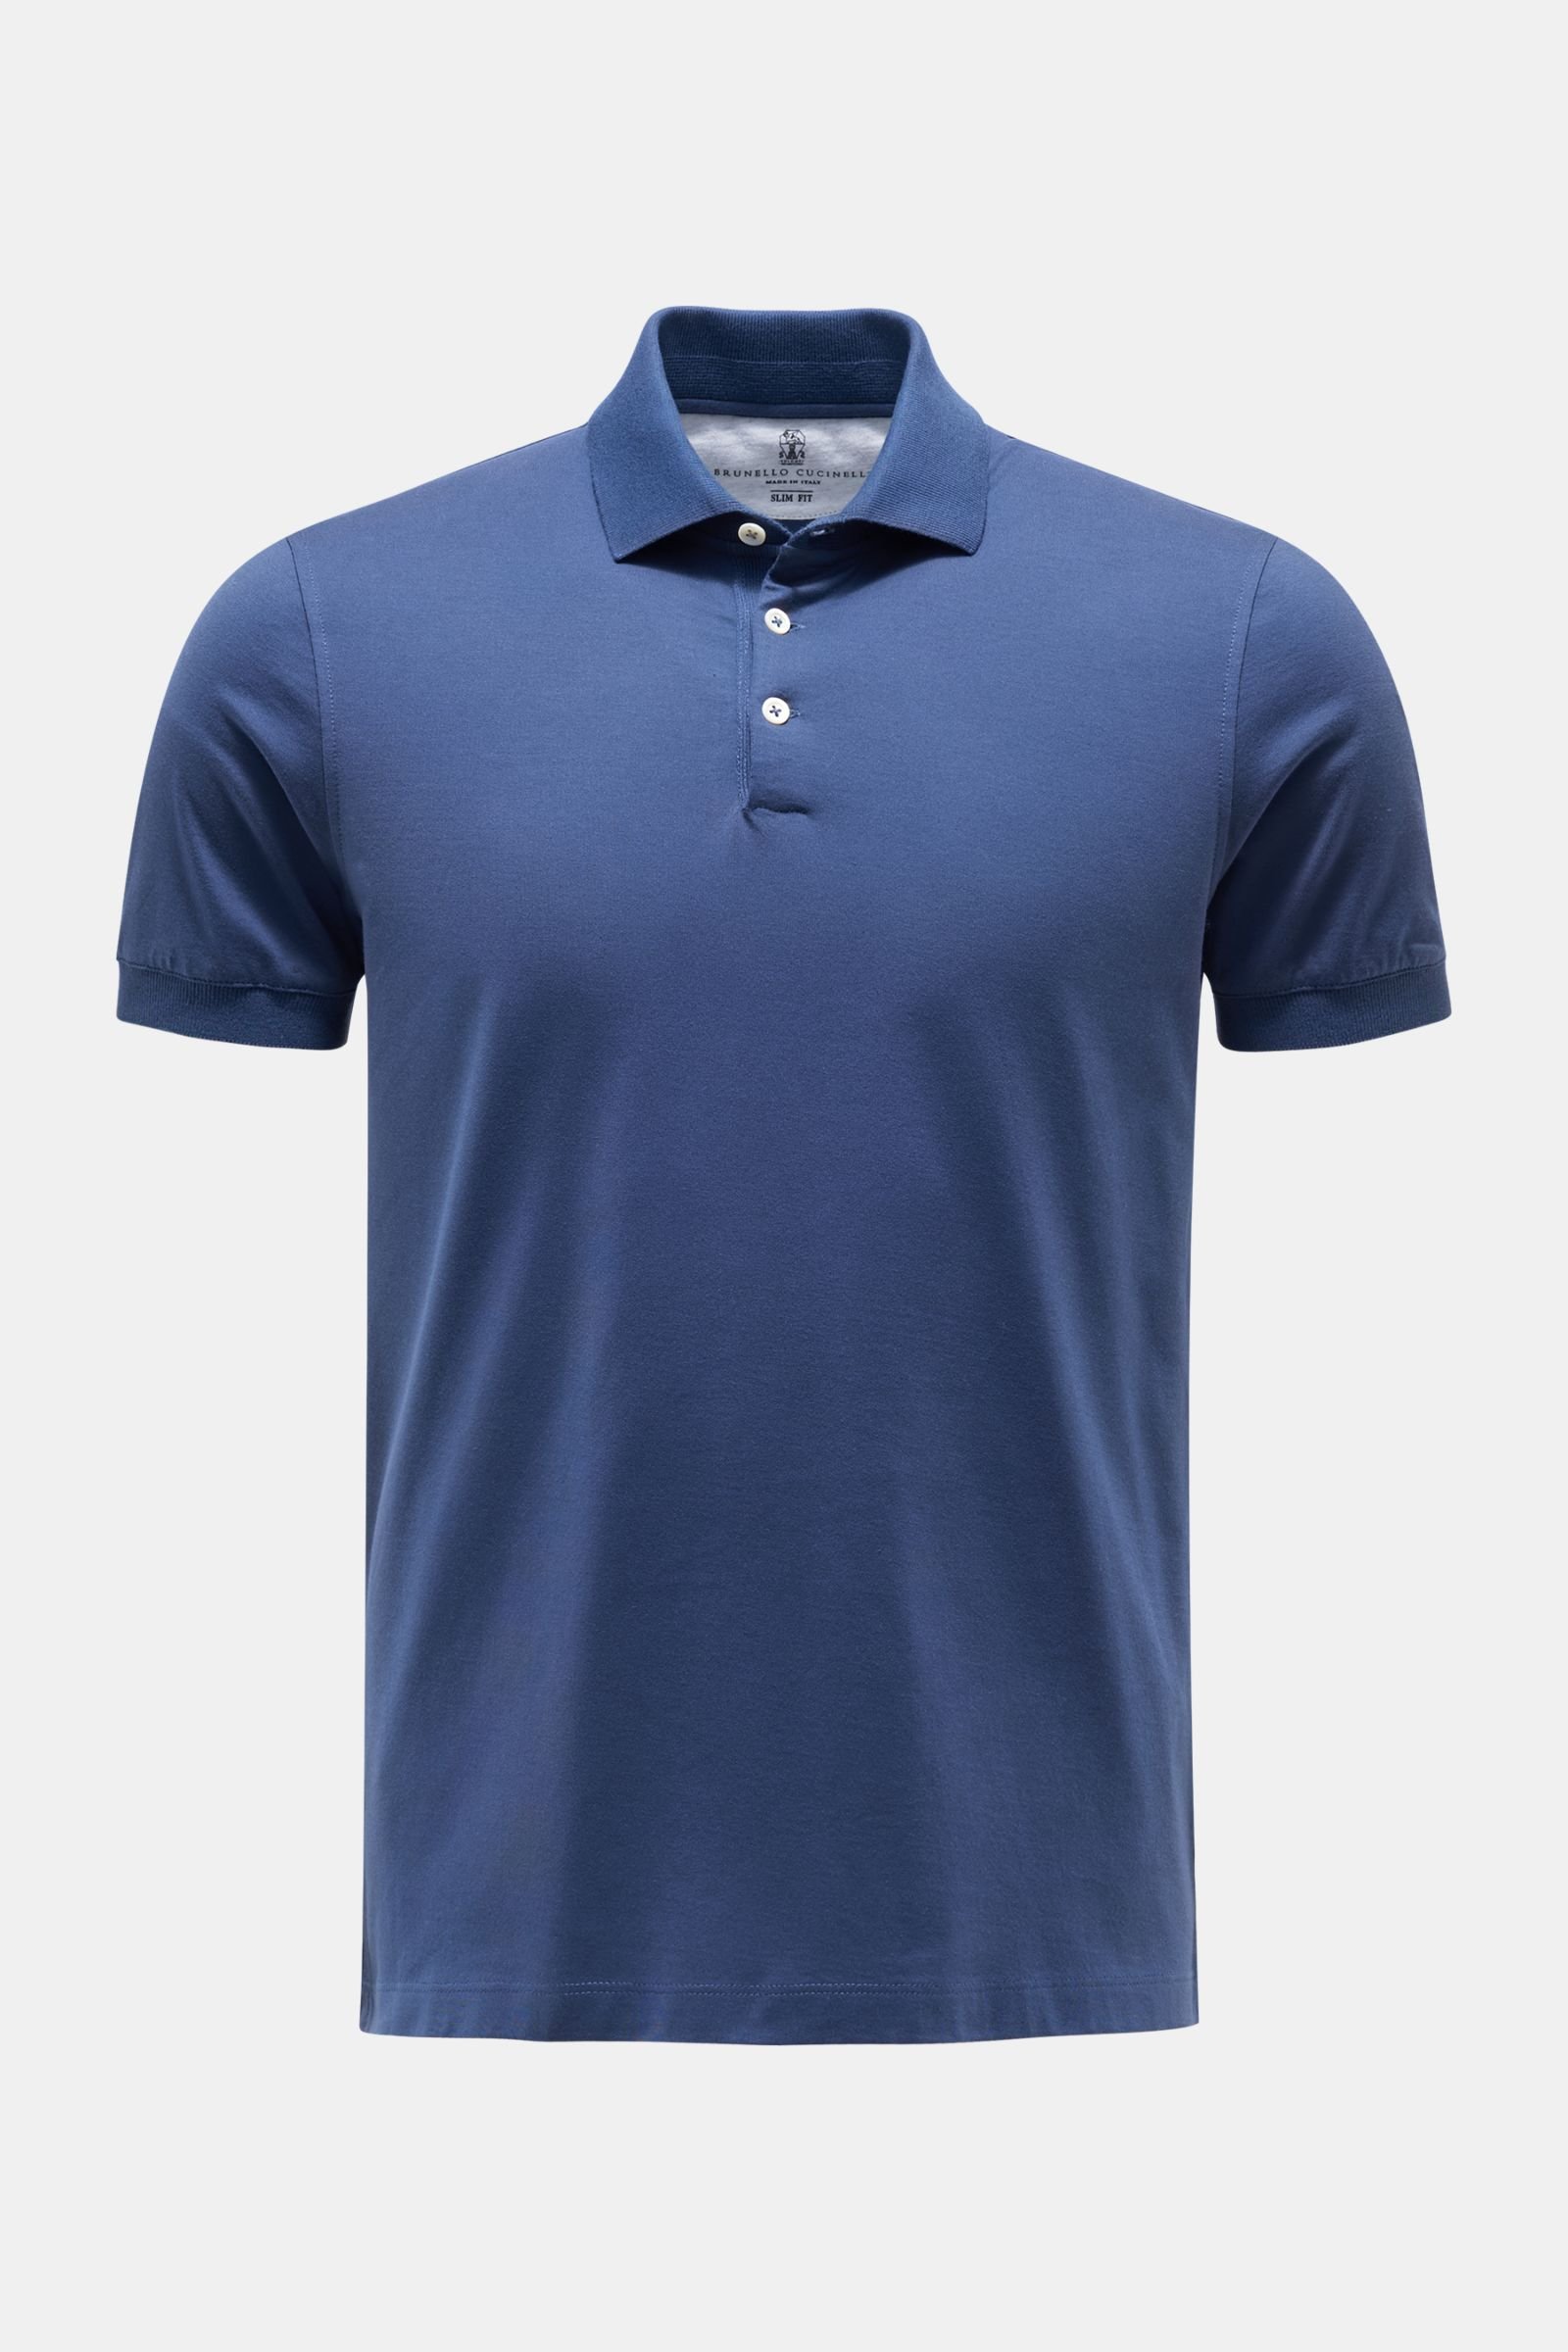 Jersey-Poloshirt dunkelblau